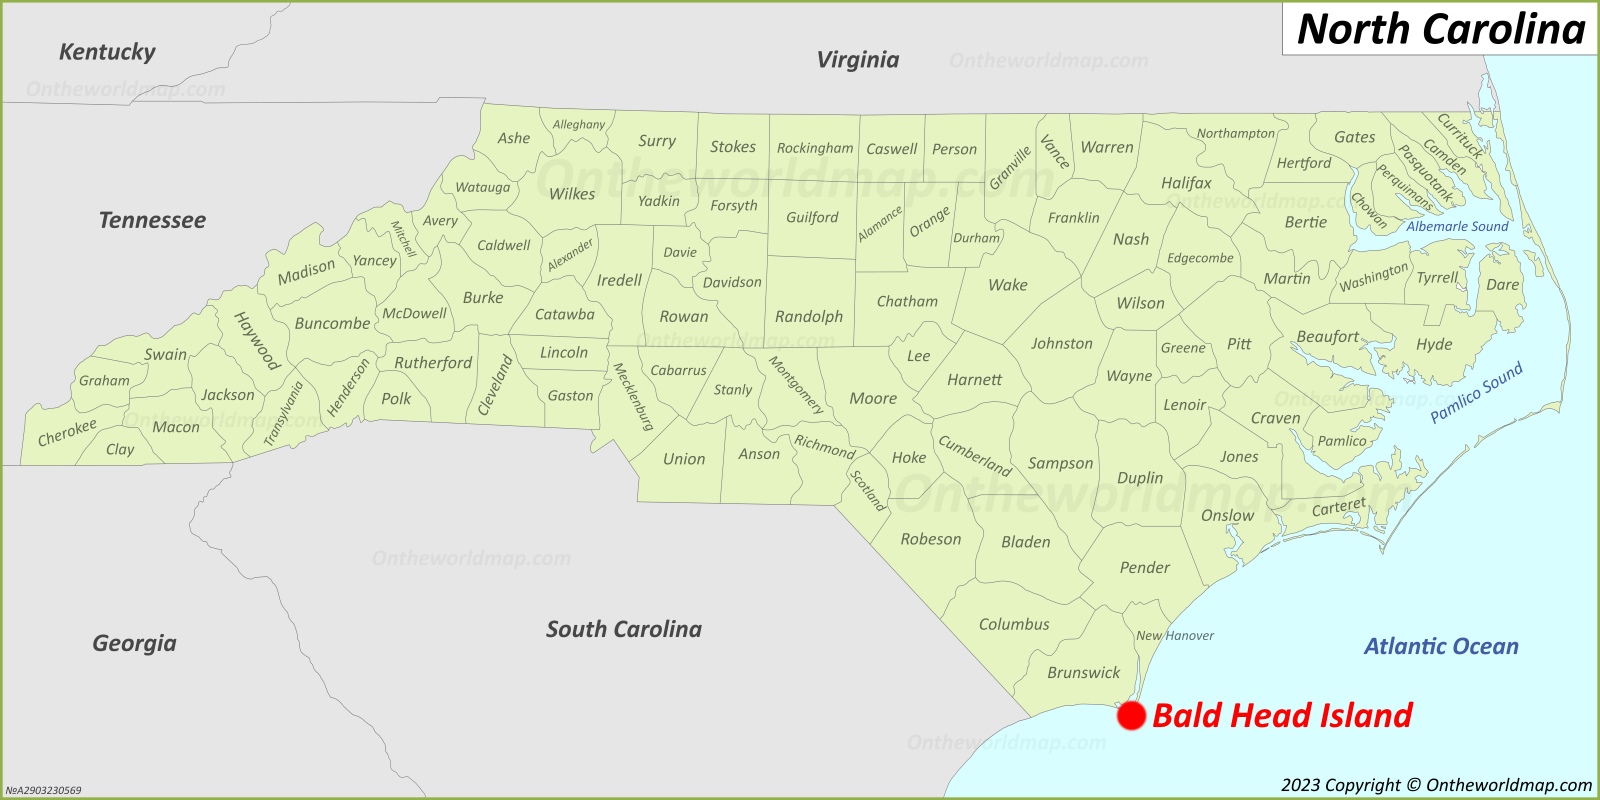 Bald Head Island Location On The North Carolina Map